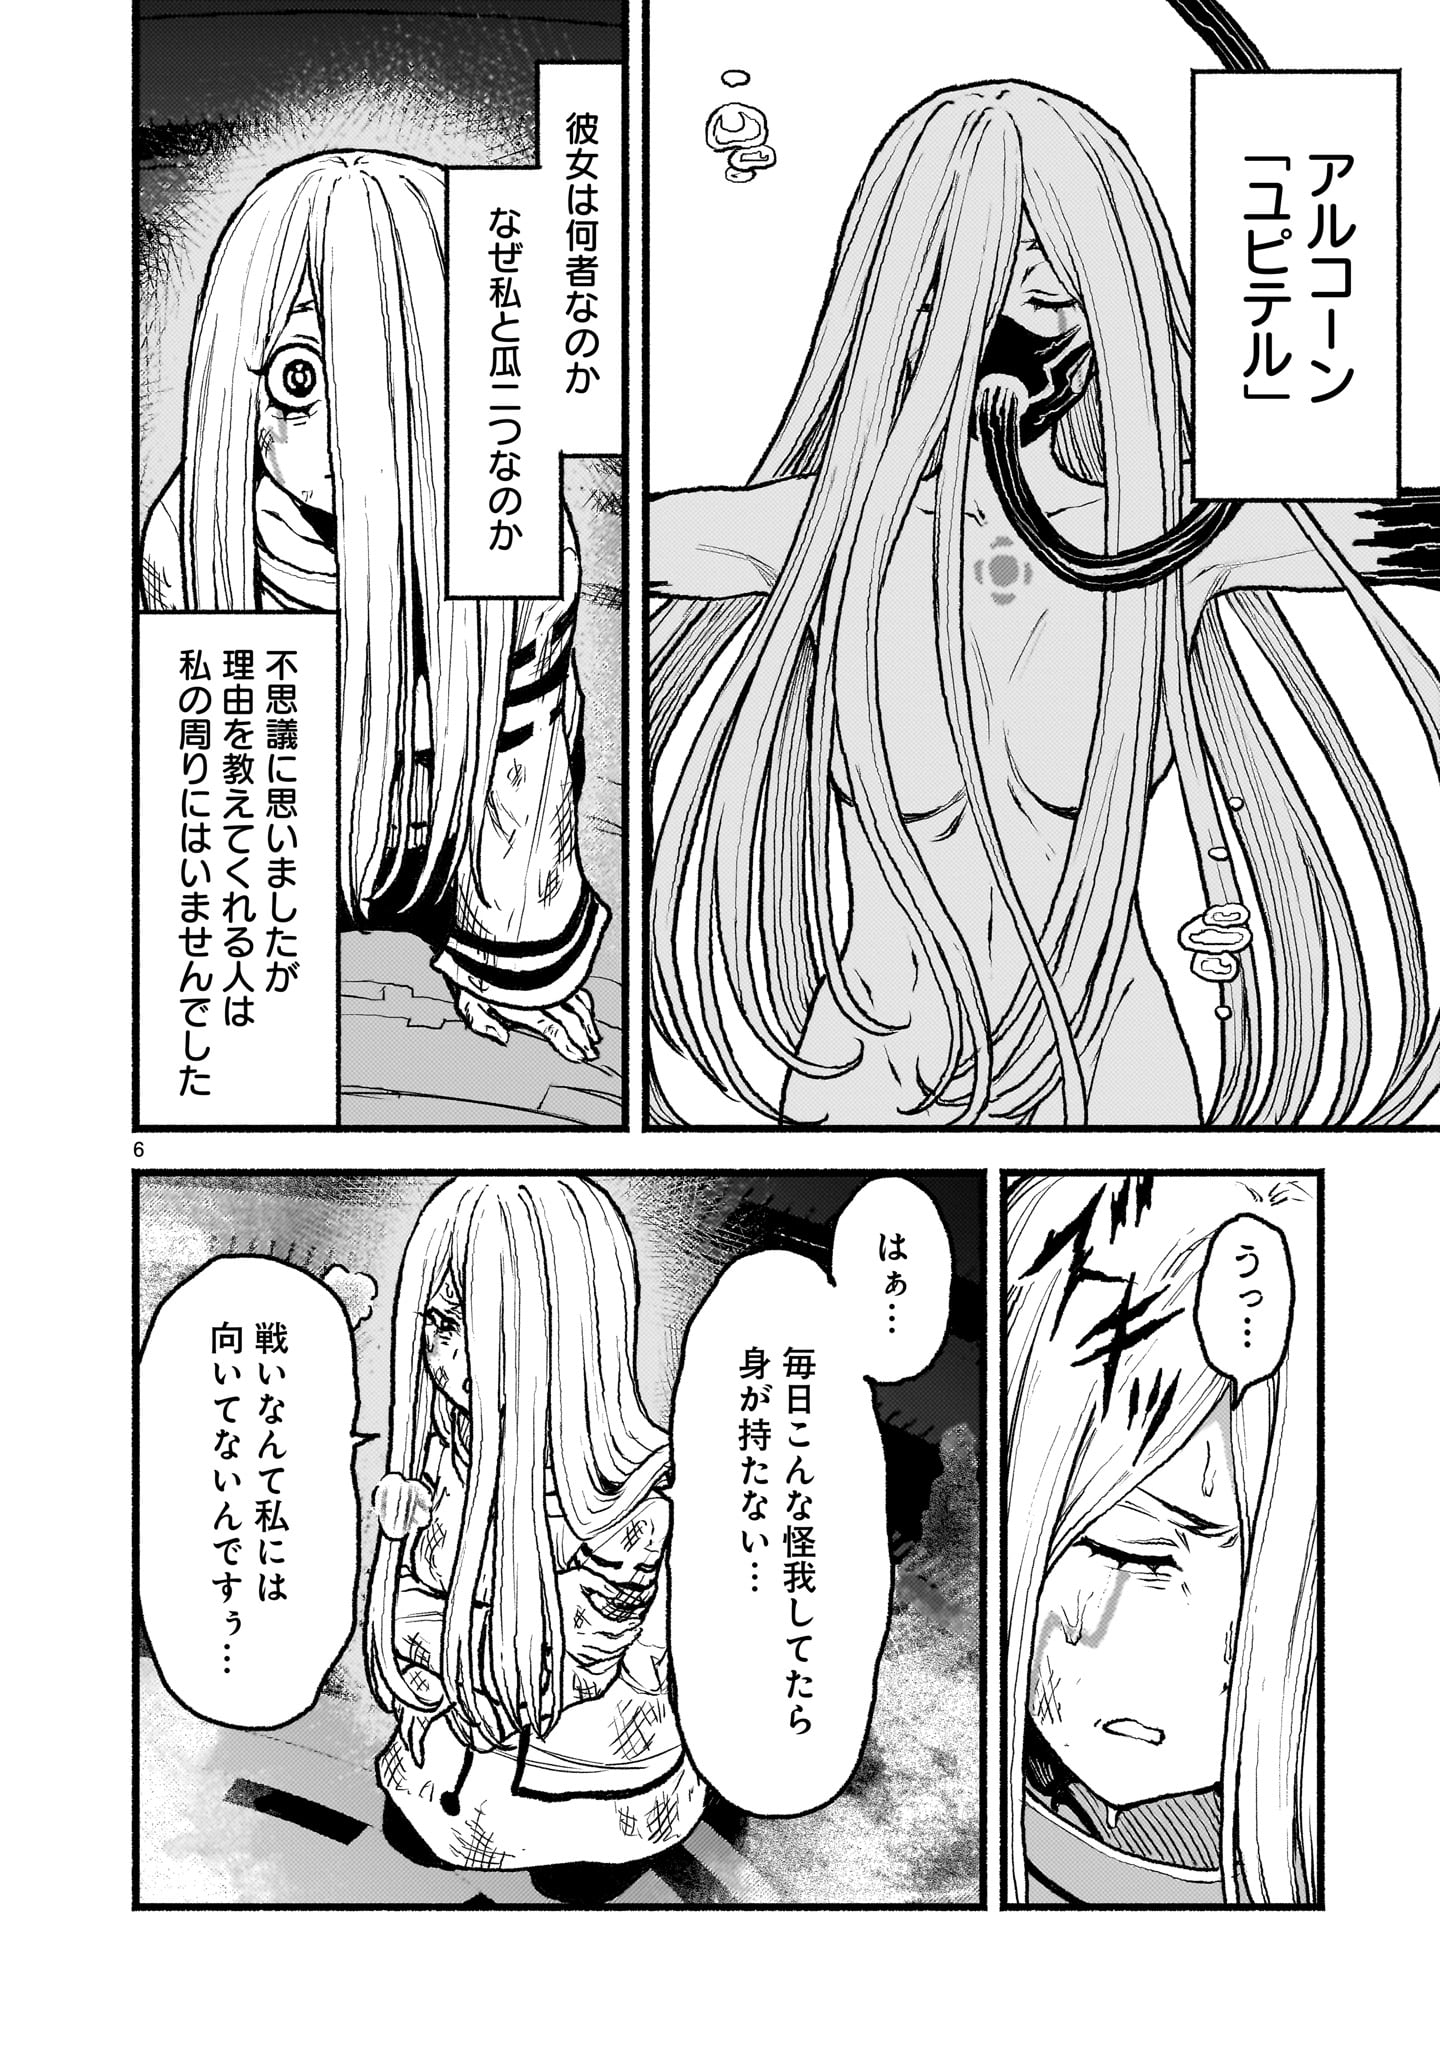 Kaminaki Sekai no Kamisama Katsudou - Chapter 47 - Page 6